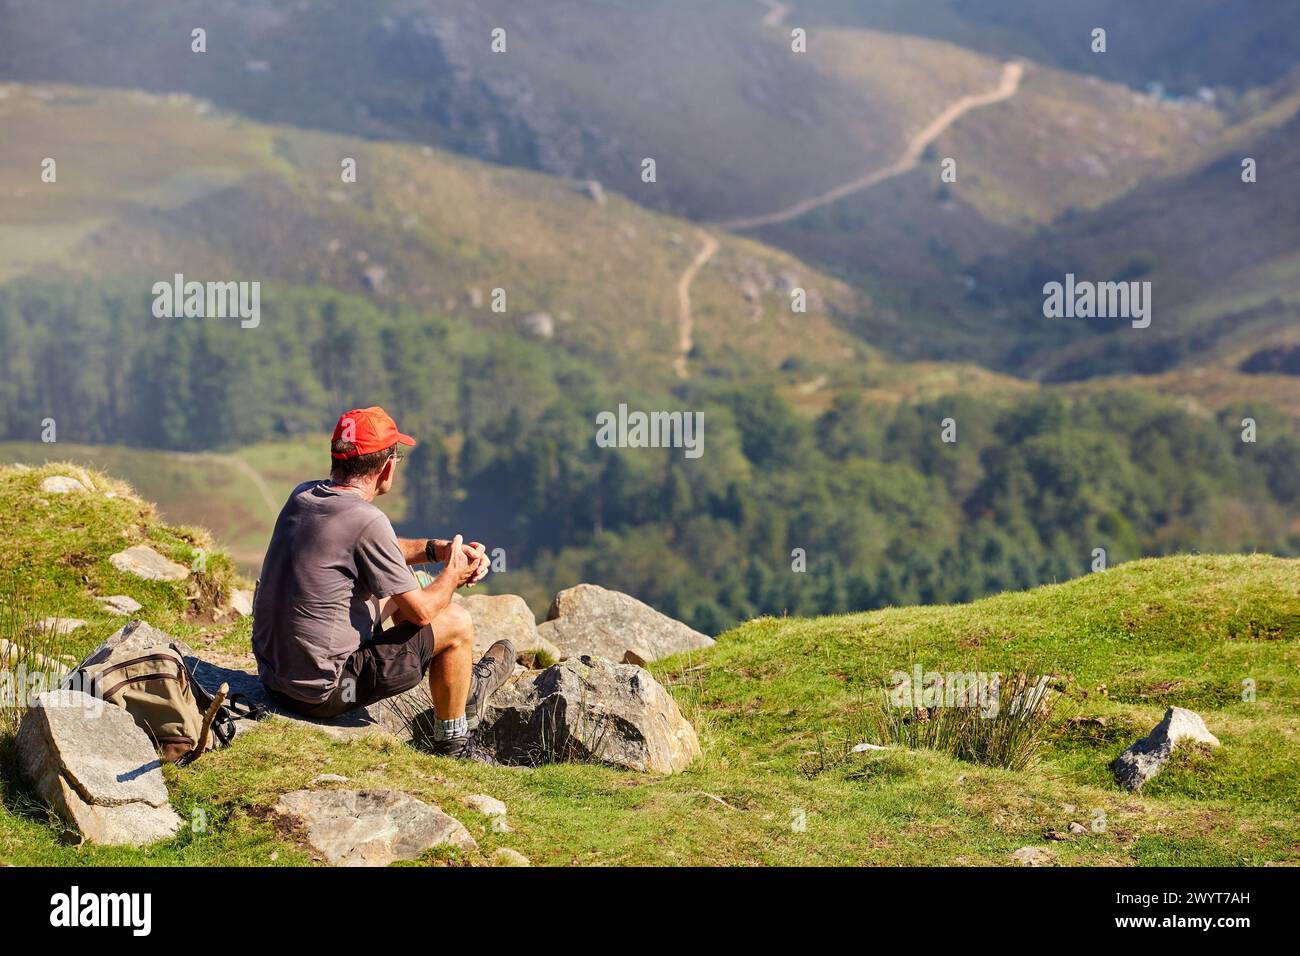 Mountaineer, Larrune mountain, La Rhune, Border between Spain and France, Europe. Stock Photo